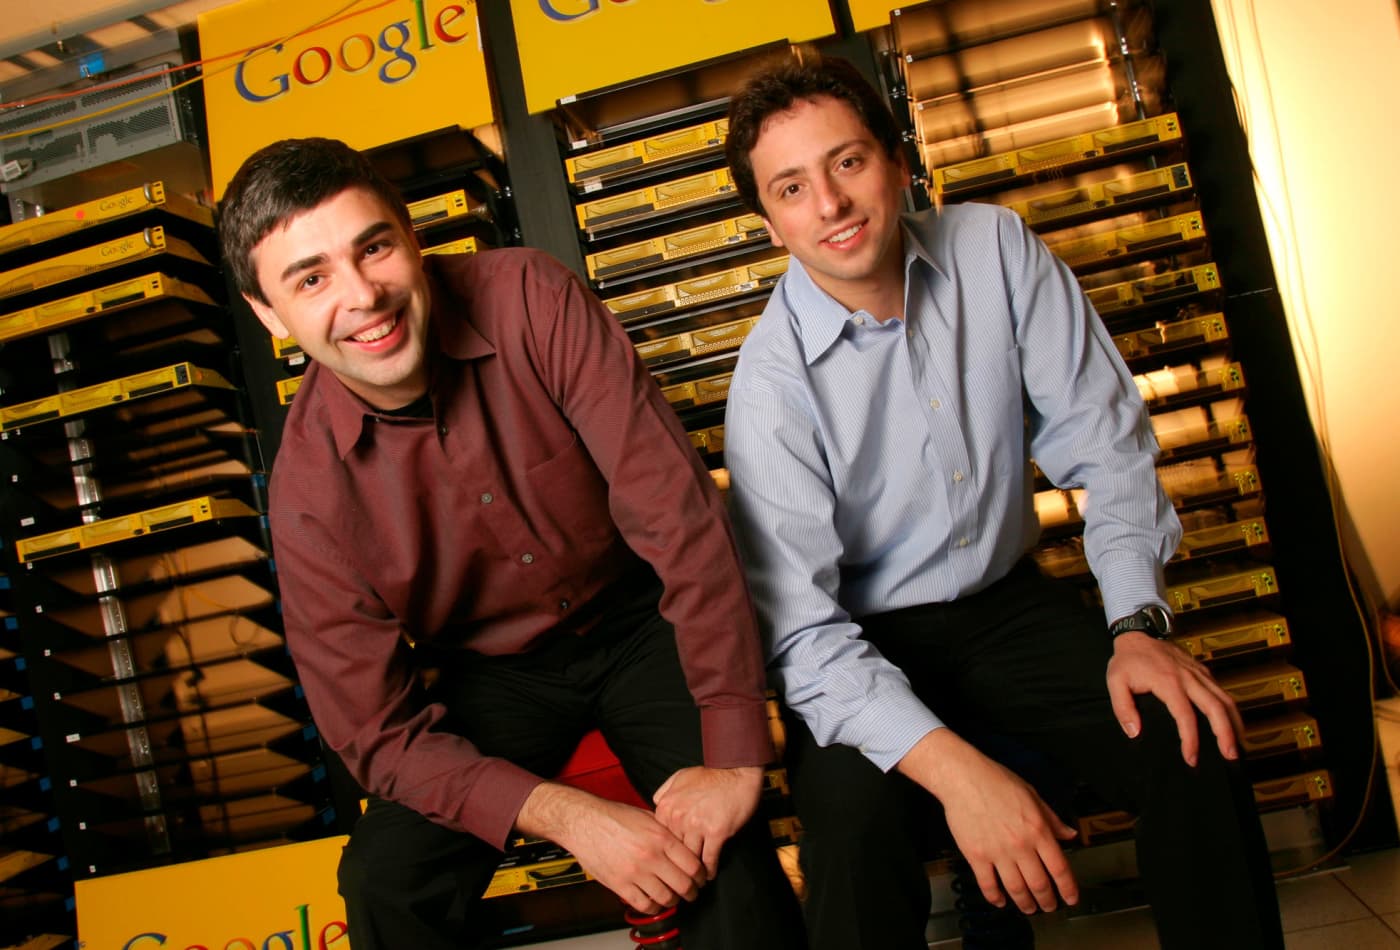 Google virtual tour of Larry Page, Sergey Brin's 1998 ...